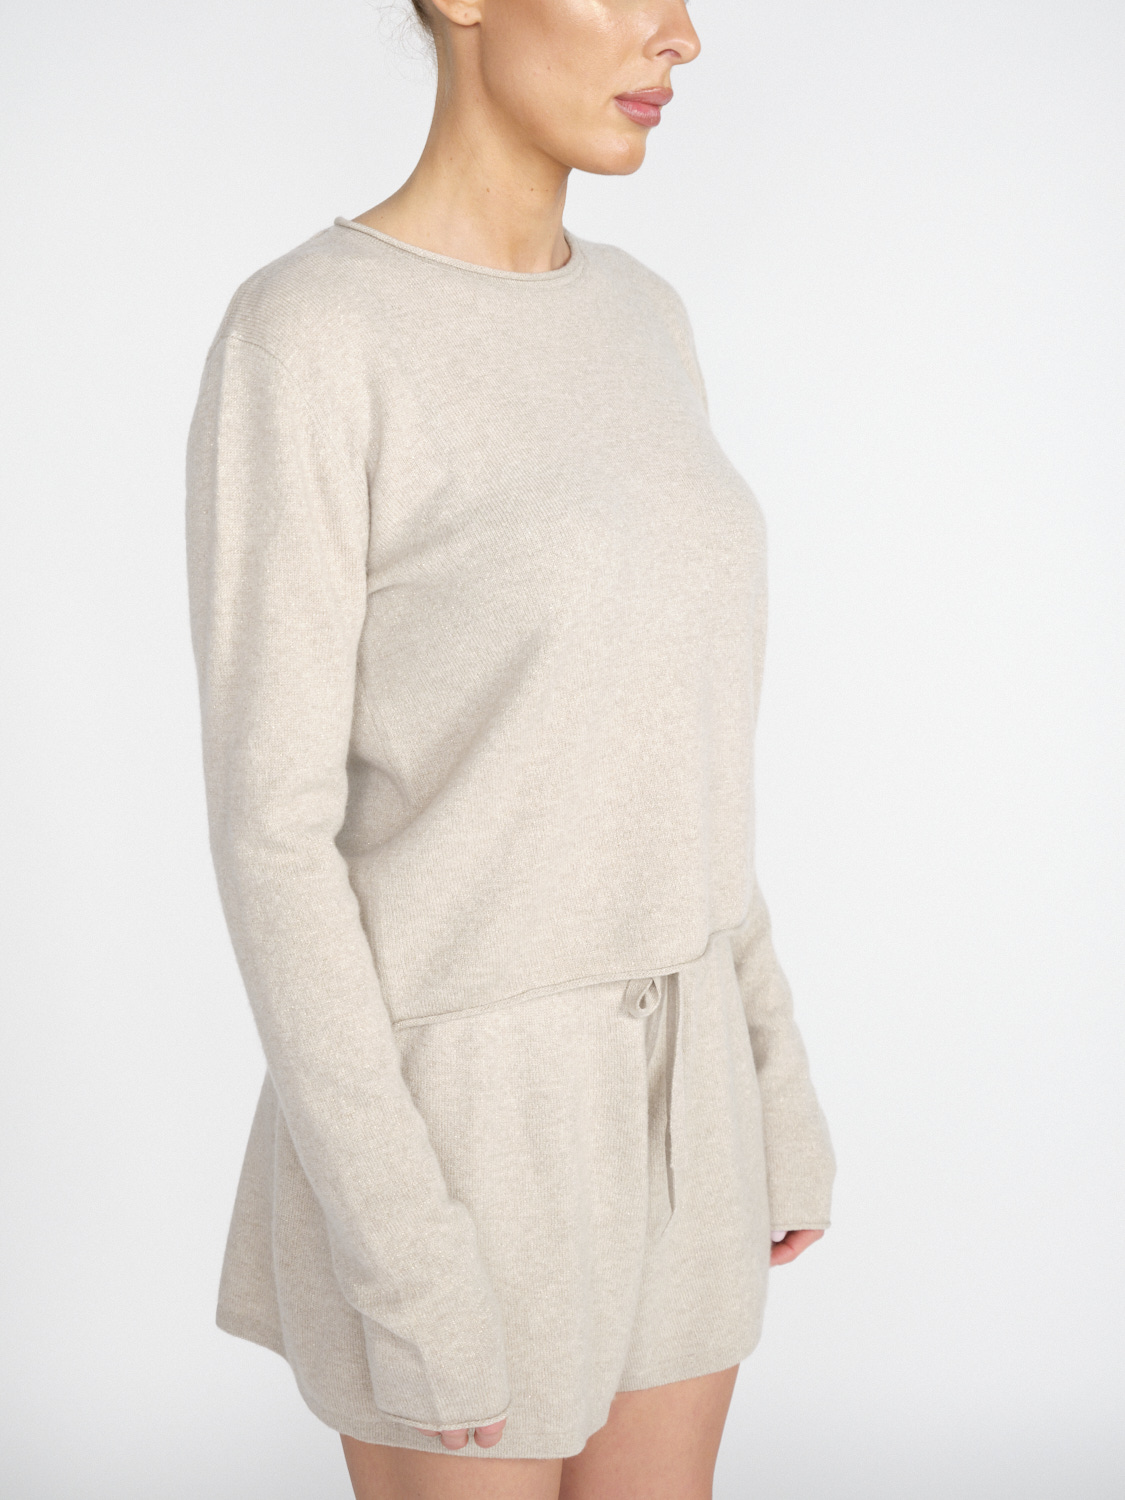 Lisa Yang Ida - Lightweight cashmere jumper with glitter effects  beige M/L